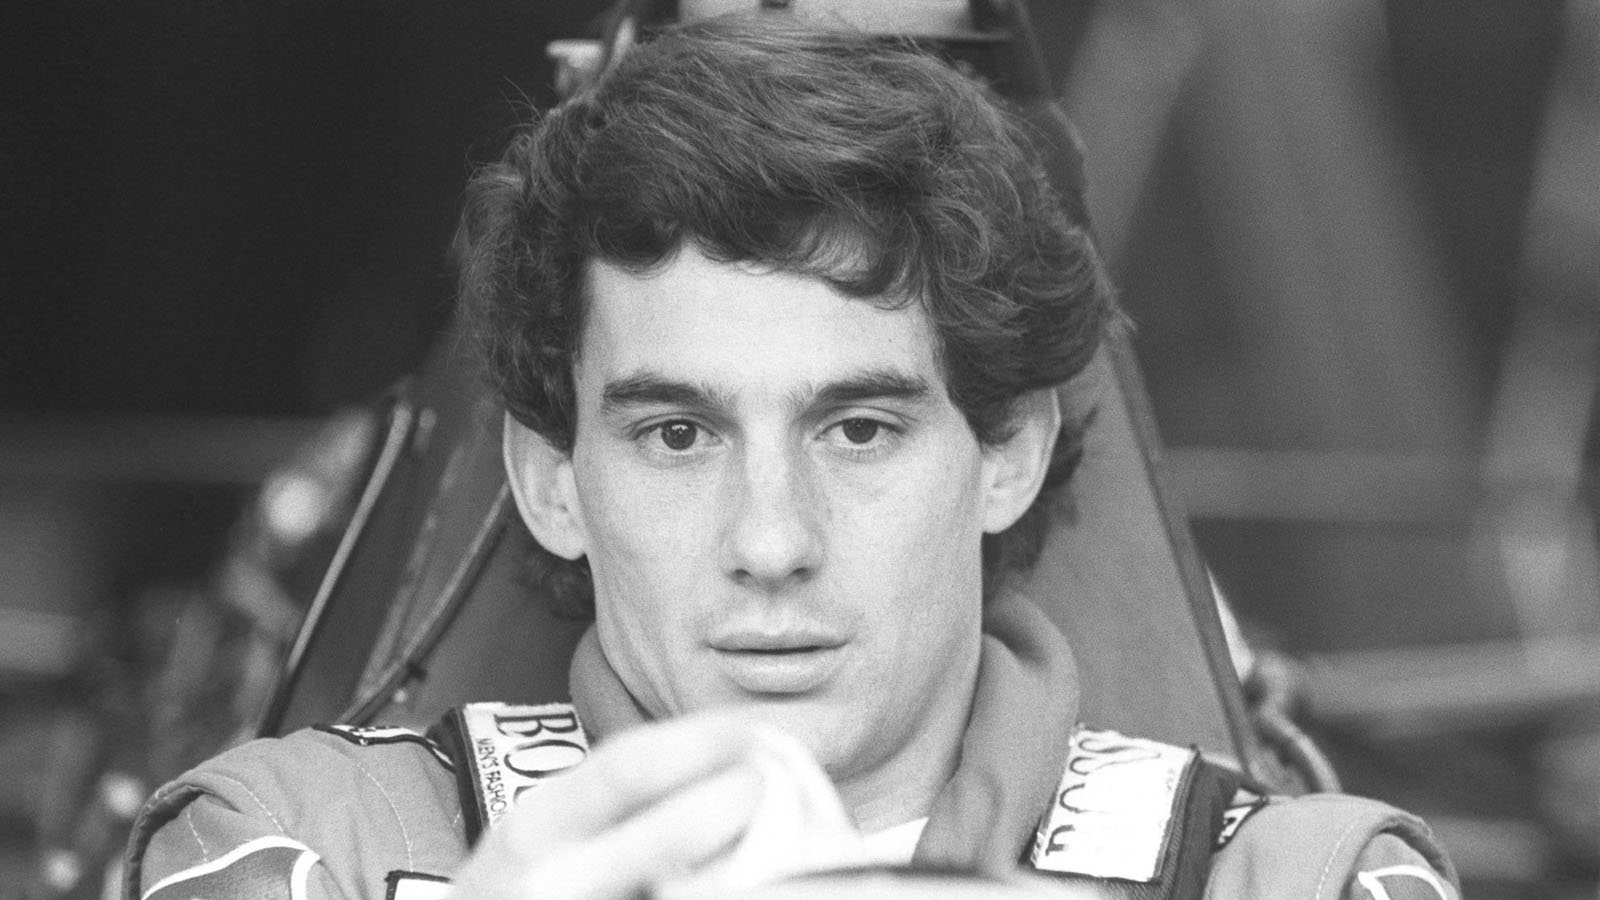 Ayrton Senna steel gaze